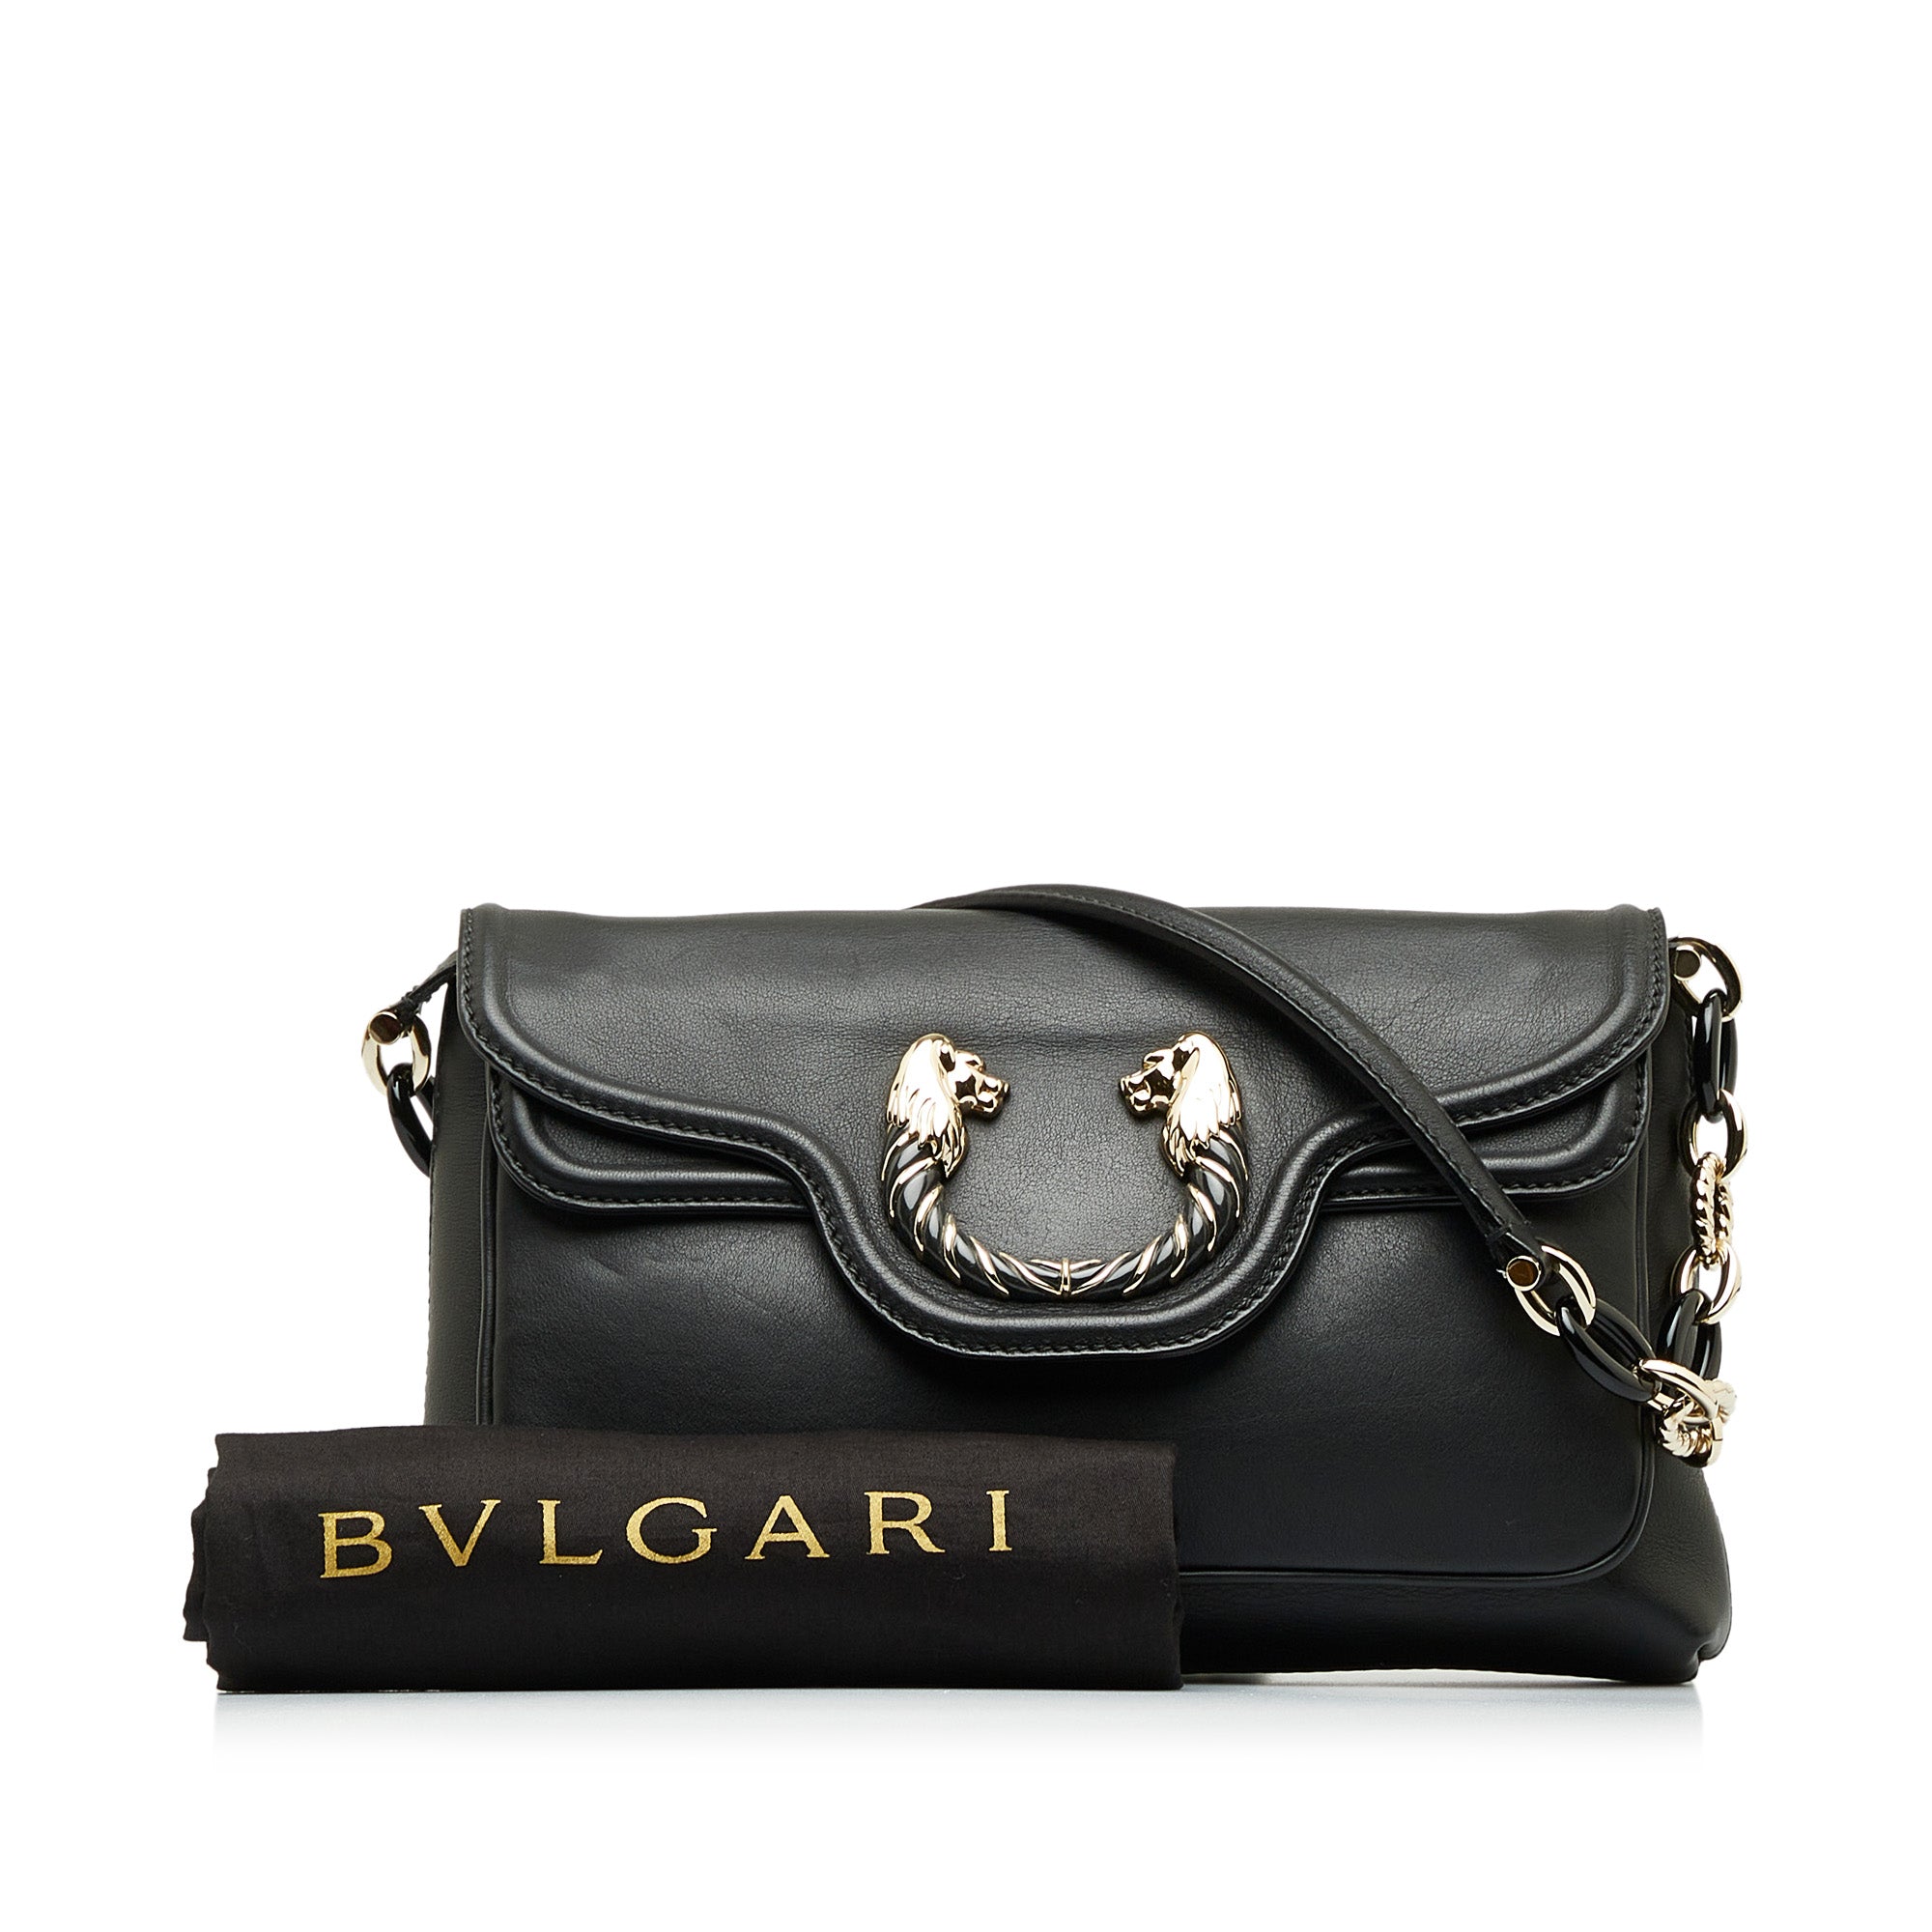 Bvlgari Black Leather Logo Shoulder Bag